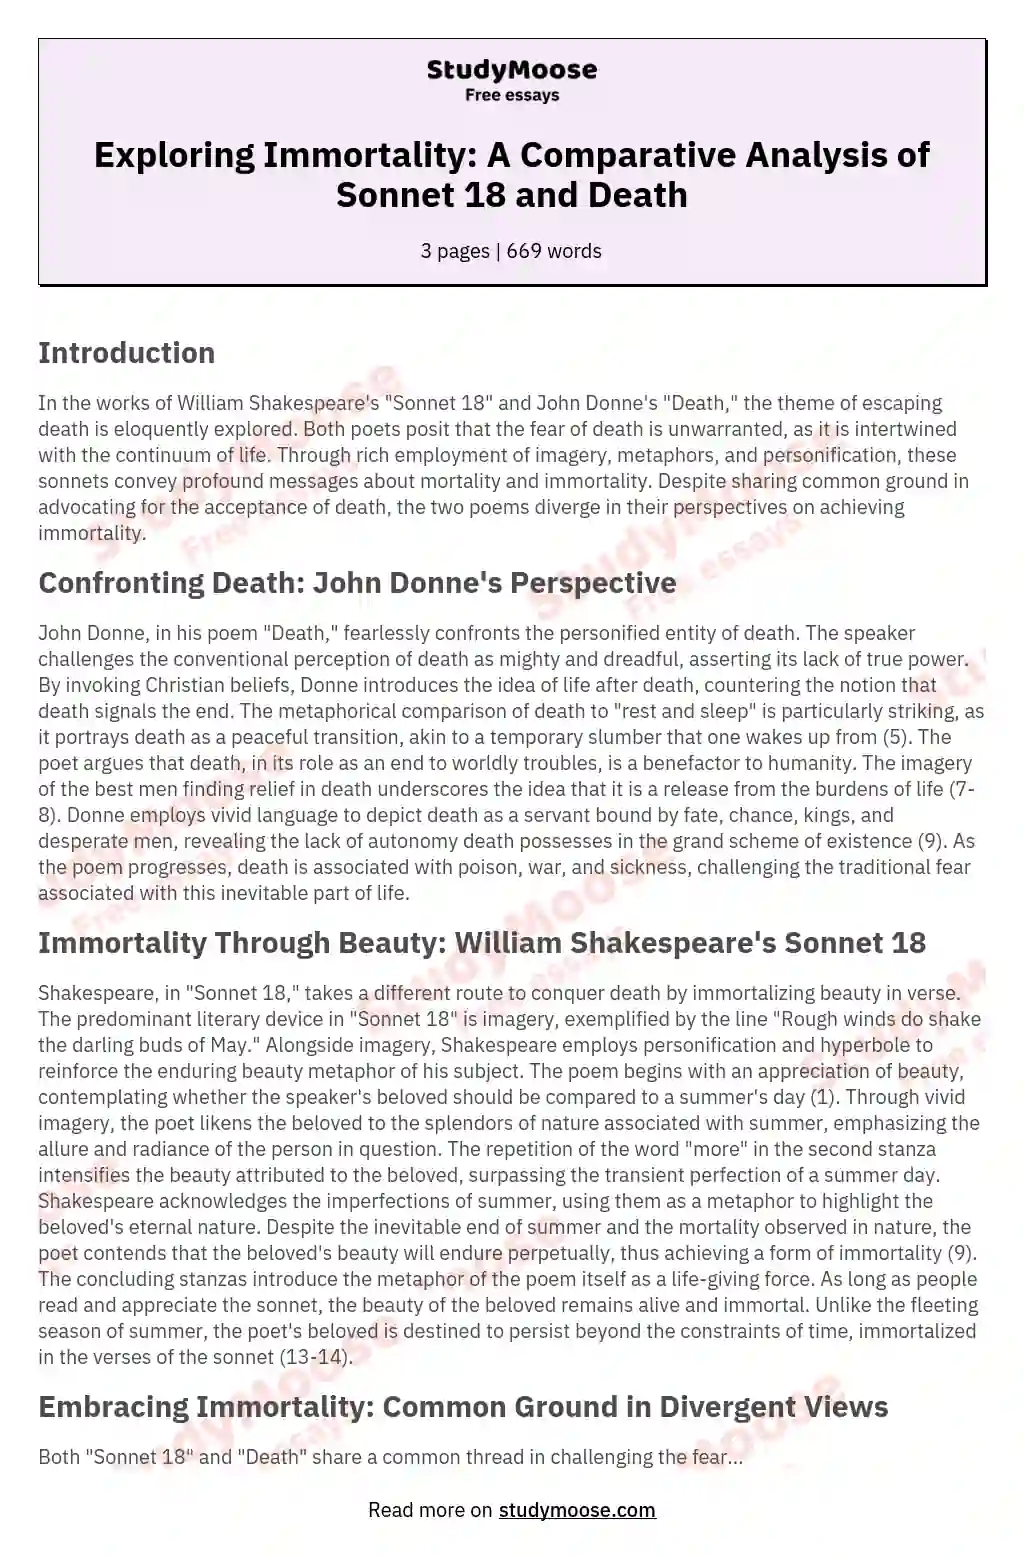 shakespeare sonnet 18 analysis essay pdf